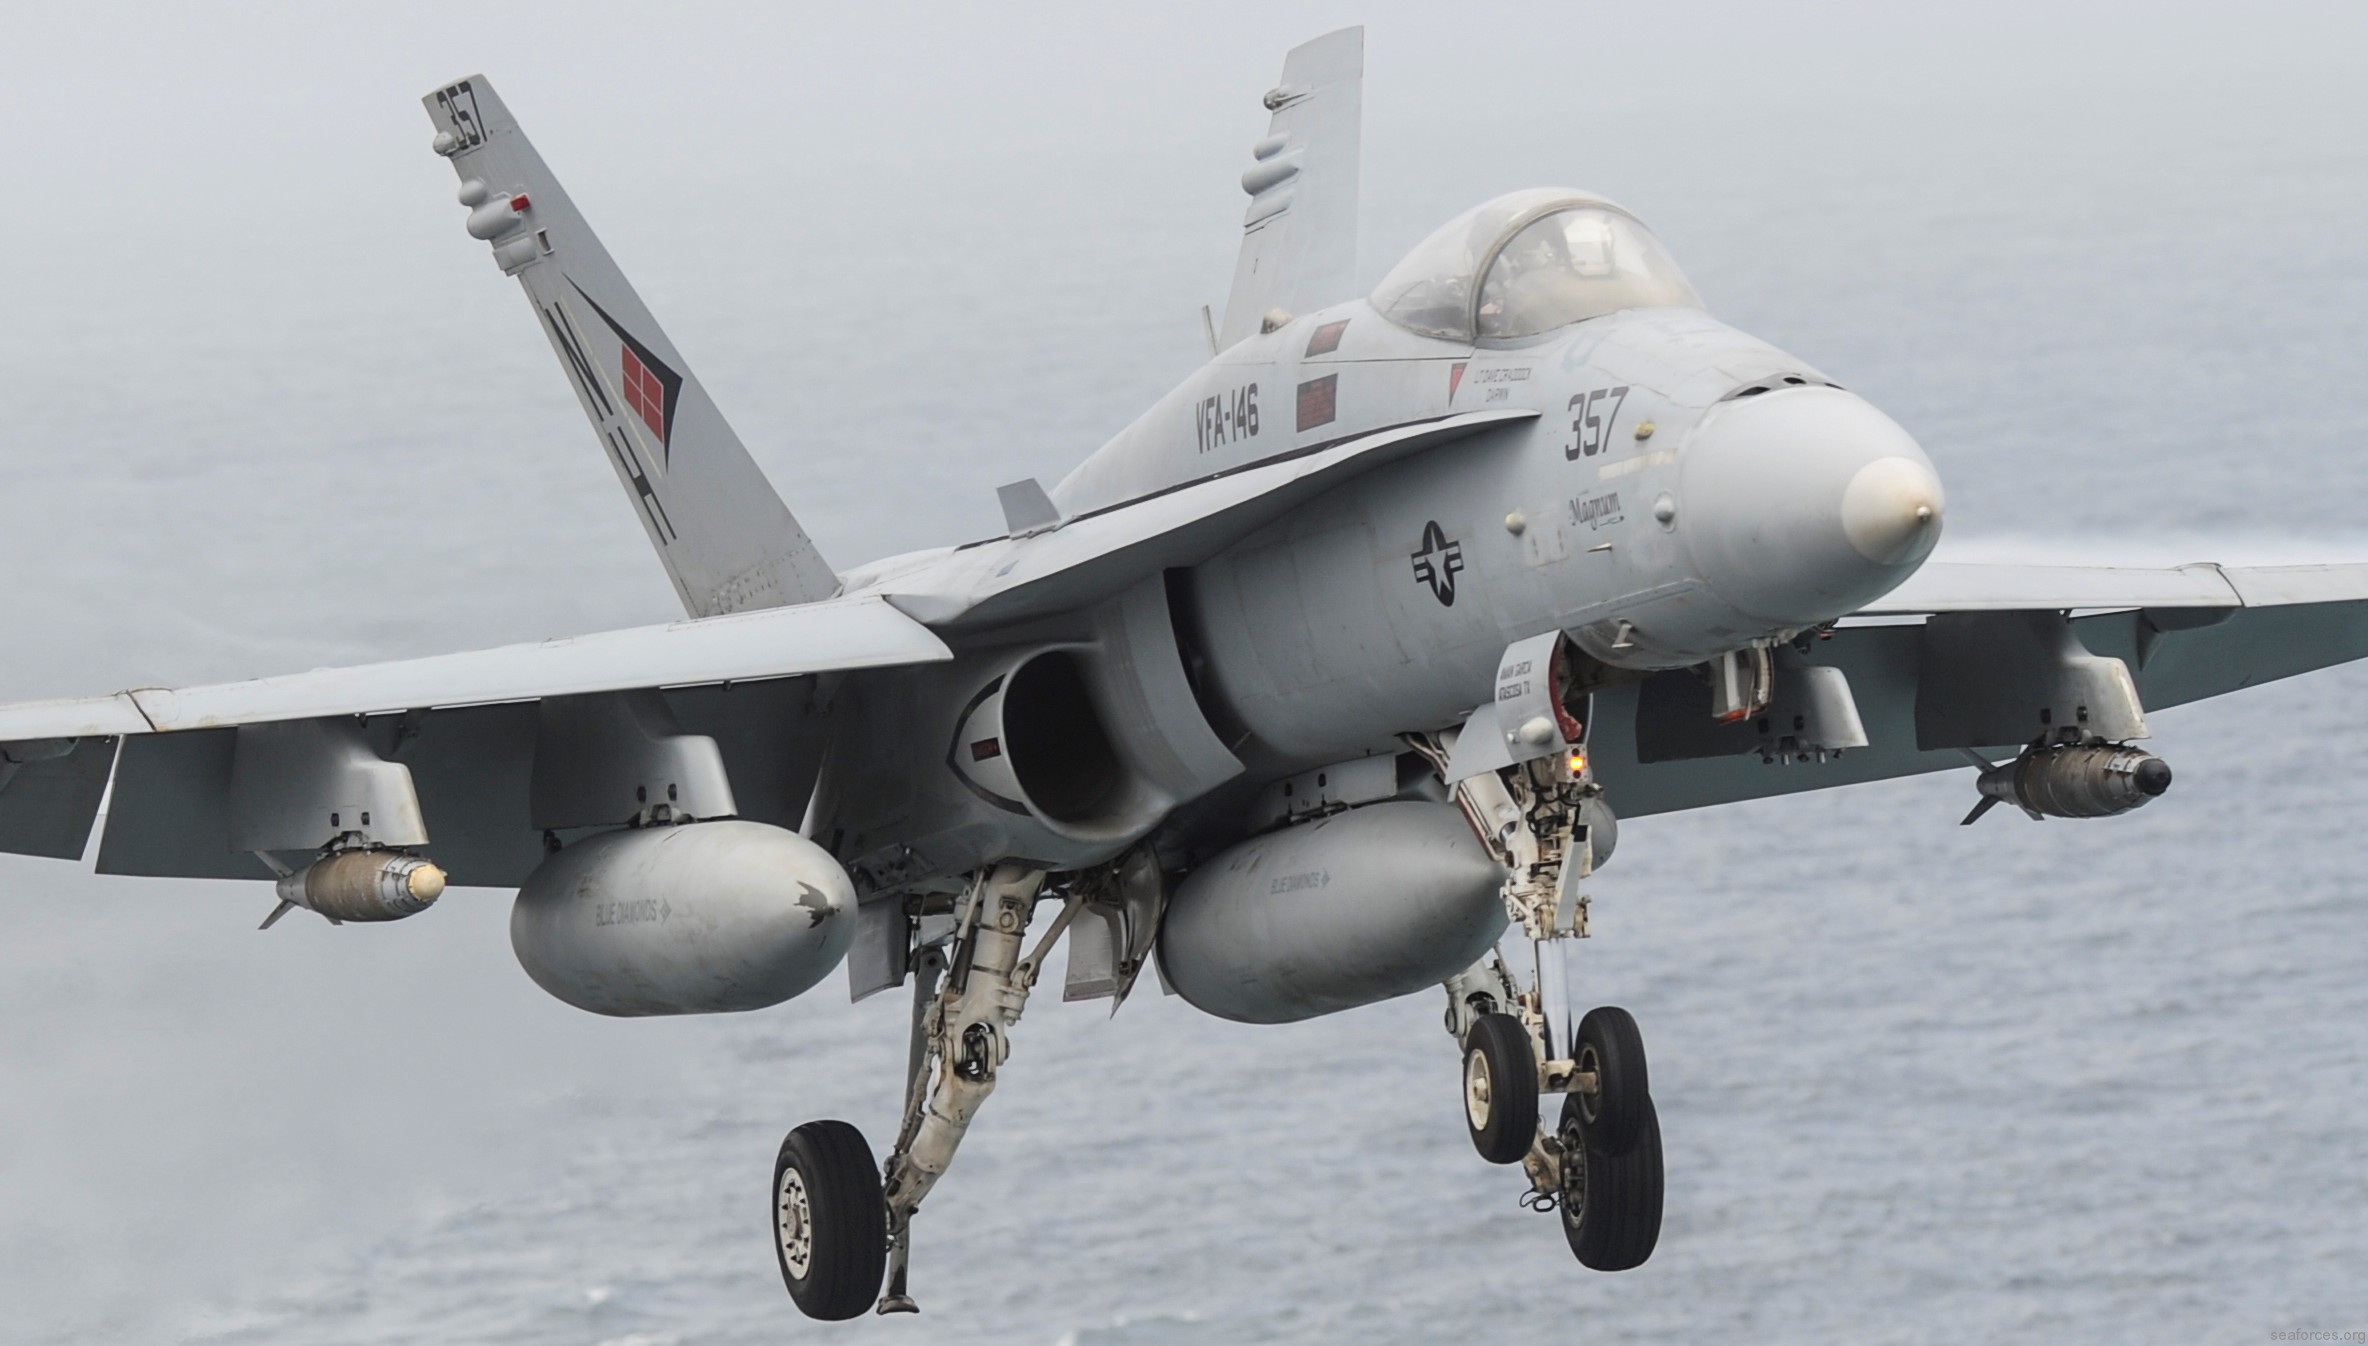 vfa-146 blue diamonds strike fighter squadron f/a-18c hornet carrier air wing cvw-11 uss nimitz cvn-68 50